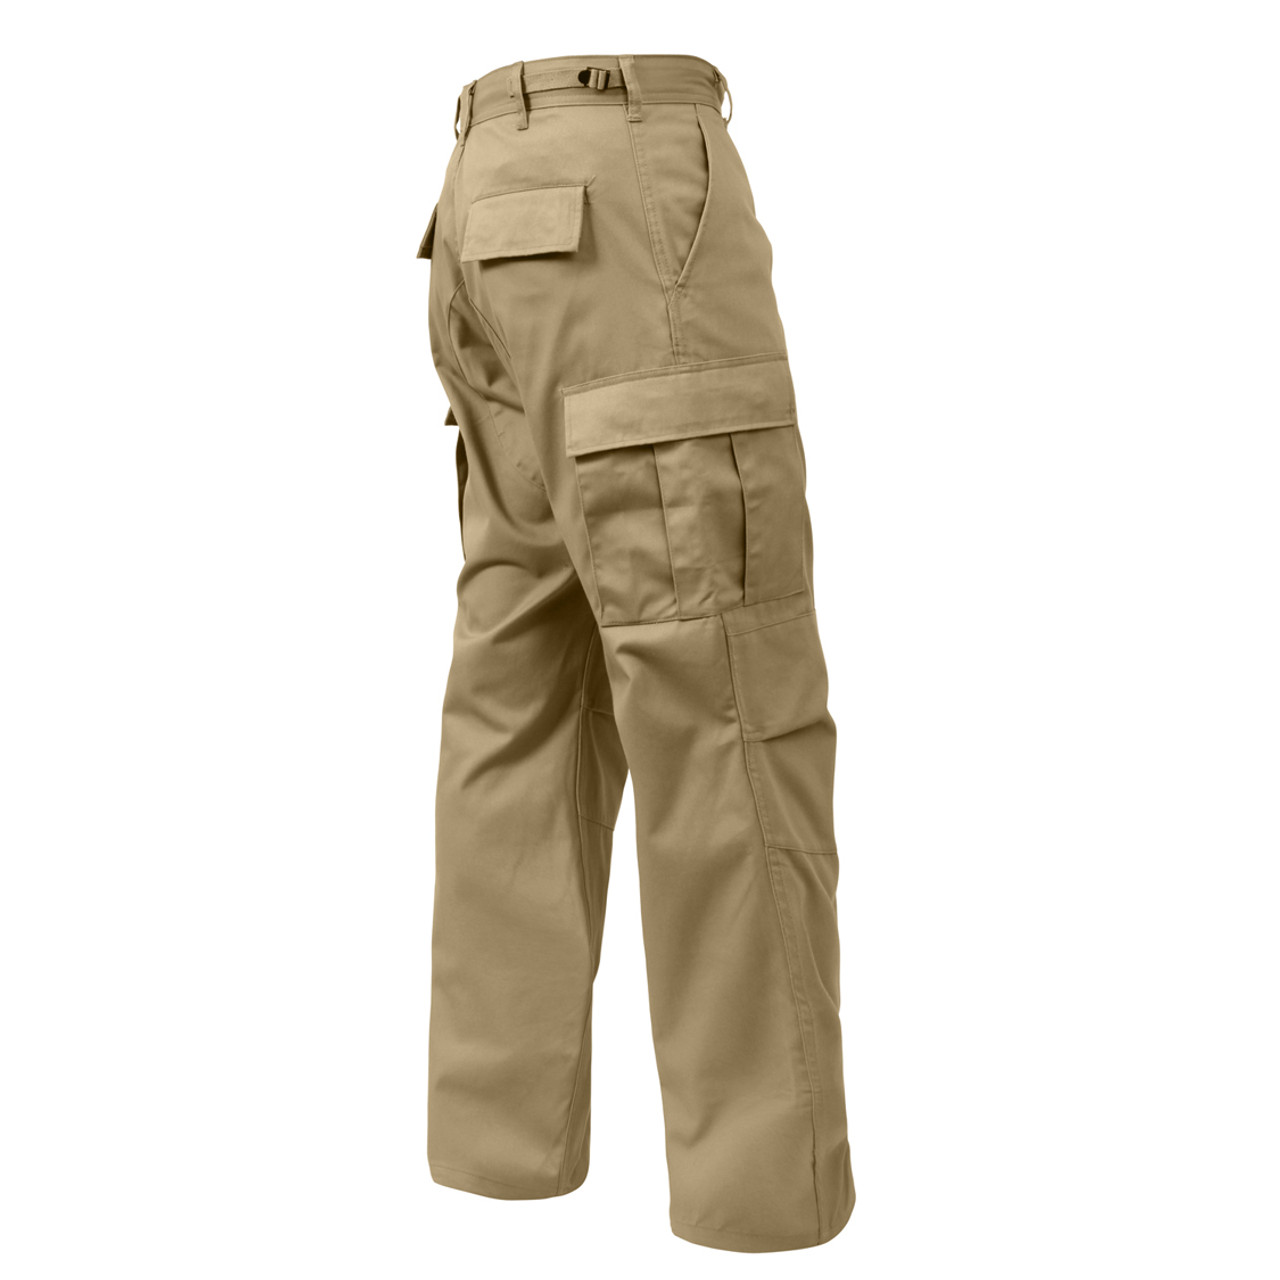 Shop Rothco Khaki BDU Fatigue Pants - Fatigues Army Navy Gear